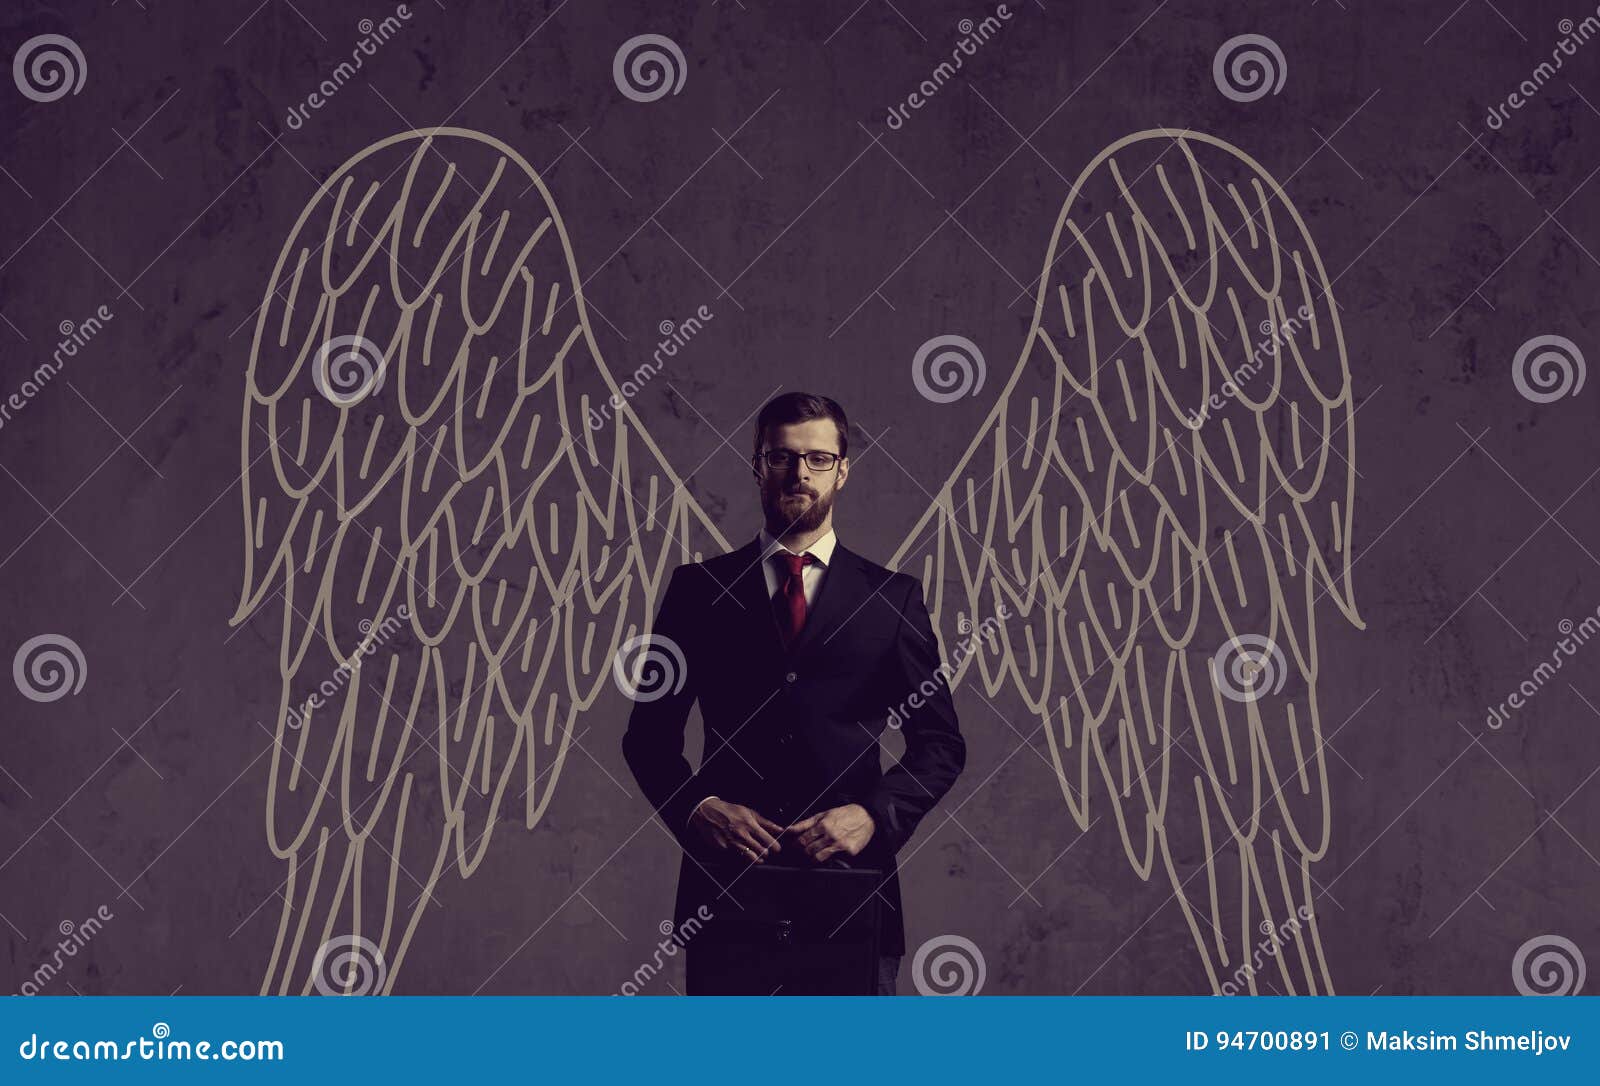 business angel over dark background. investment, business, sponsor concept.